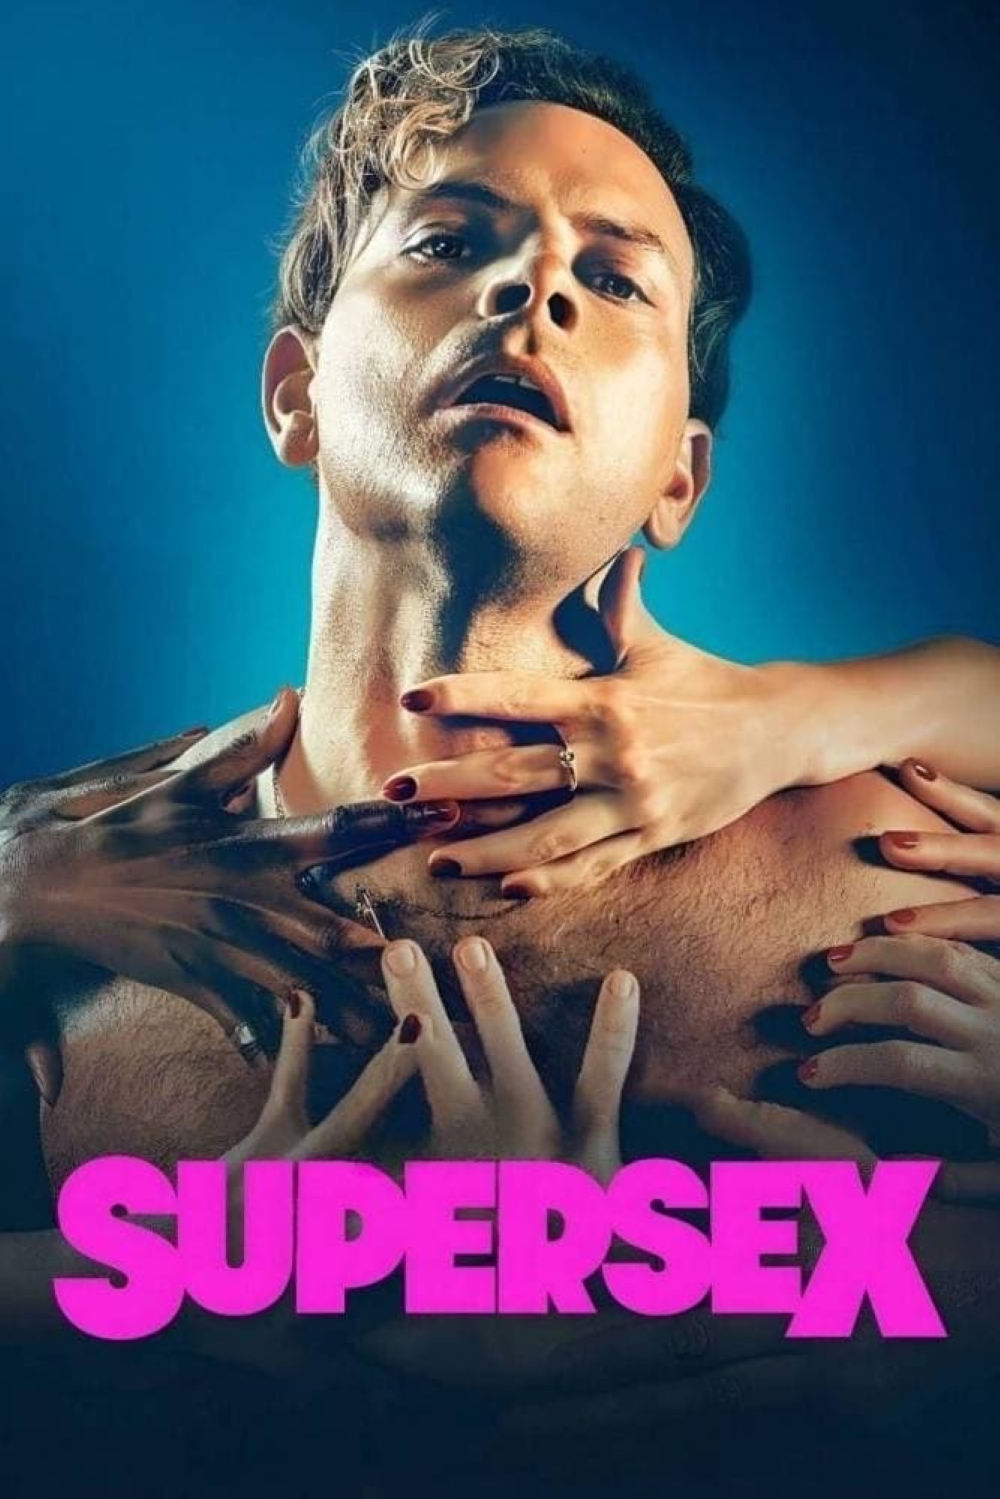 Plakát pro film “Supersex”